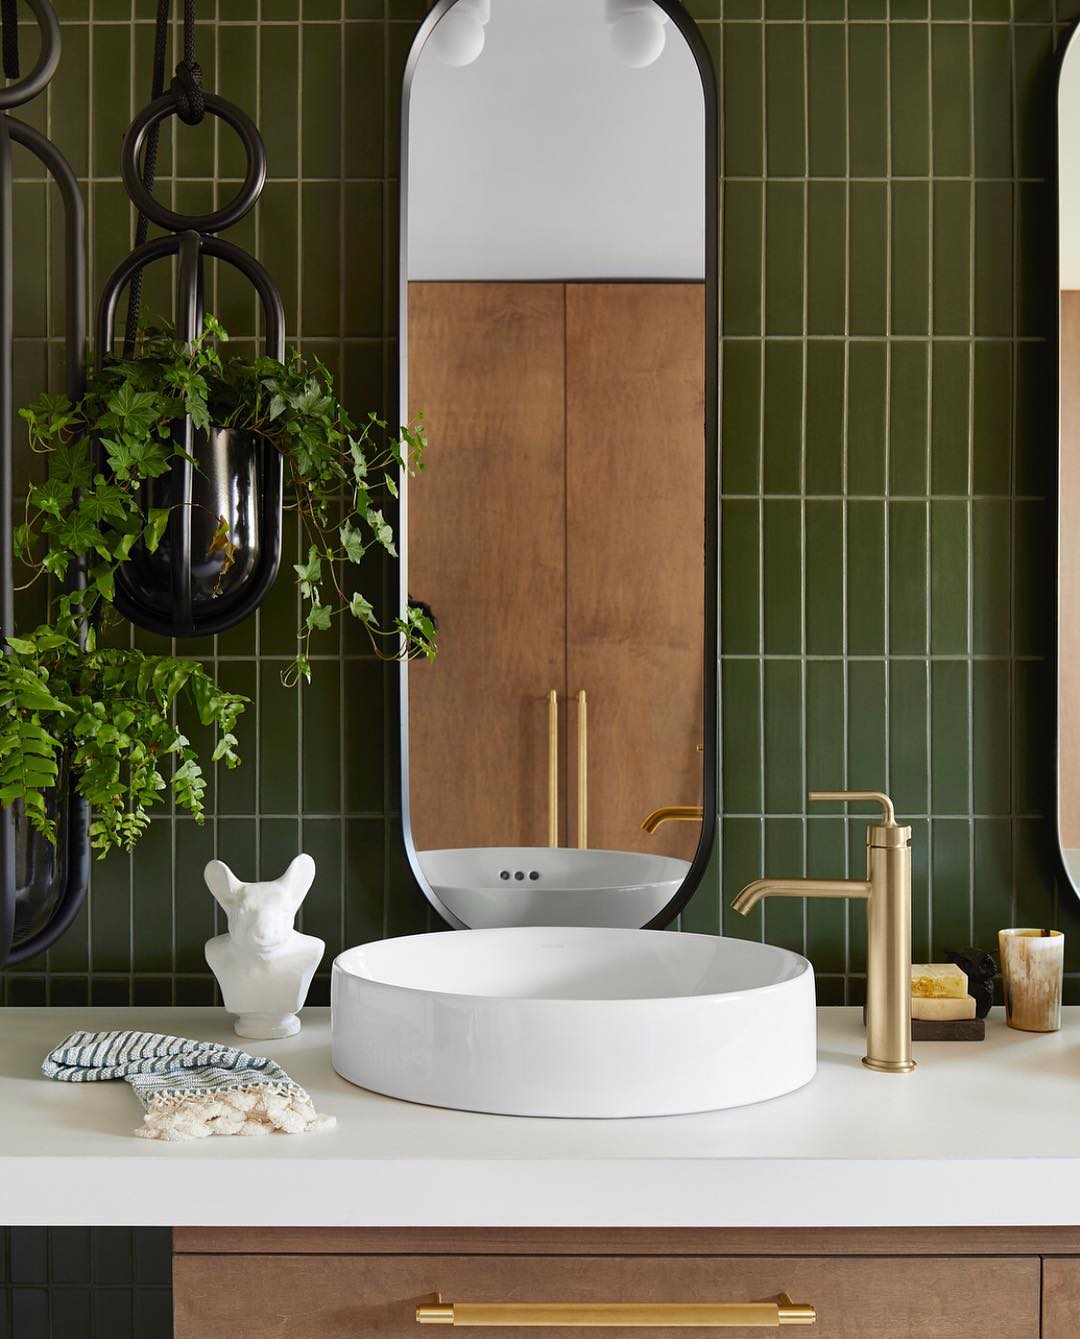 Bathroom vanity with green tile backsplash. Photo by Instagram user @fireclaytile